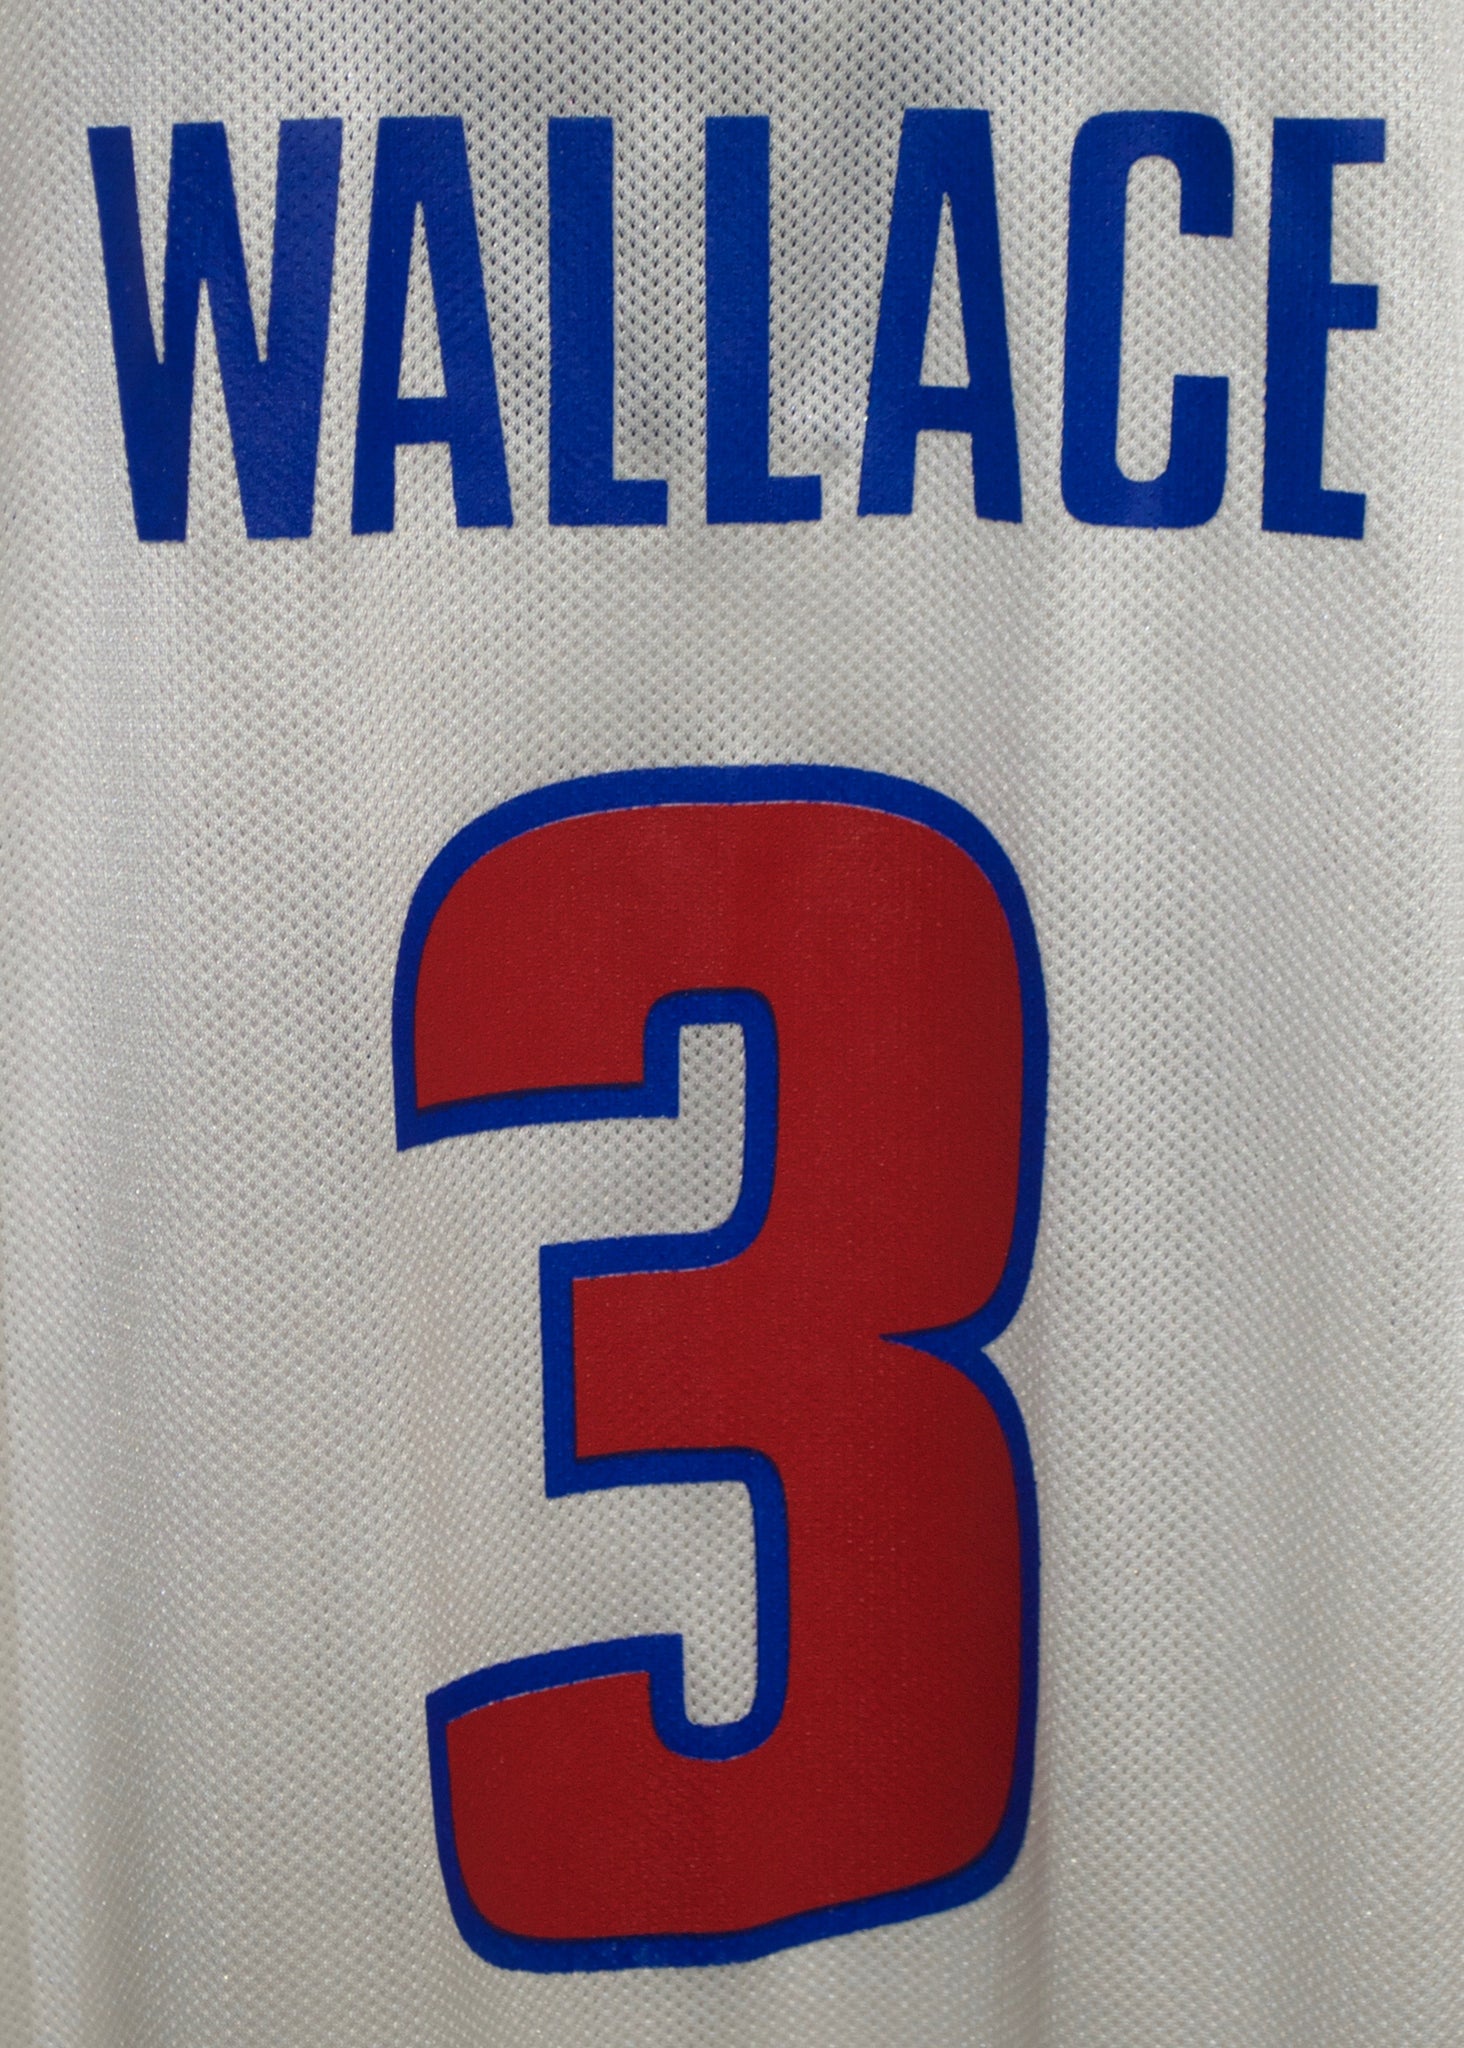 2004-05 Ben Wallace Game Worn Detroit Pistons Throwback Jersey